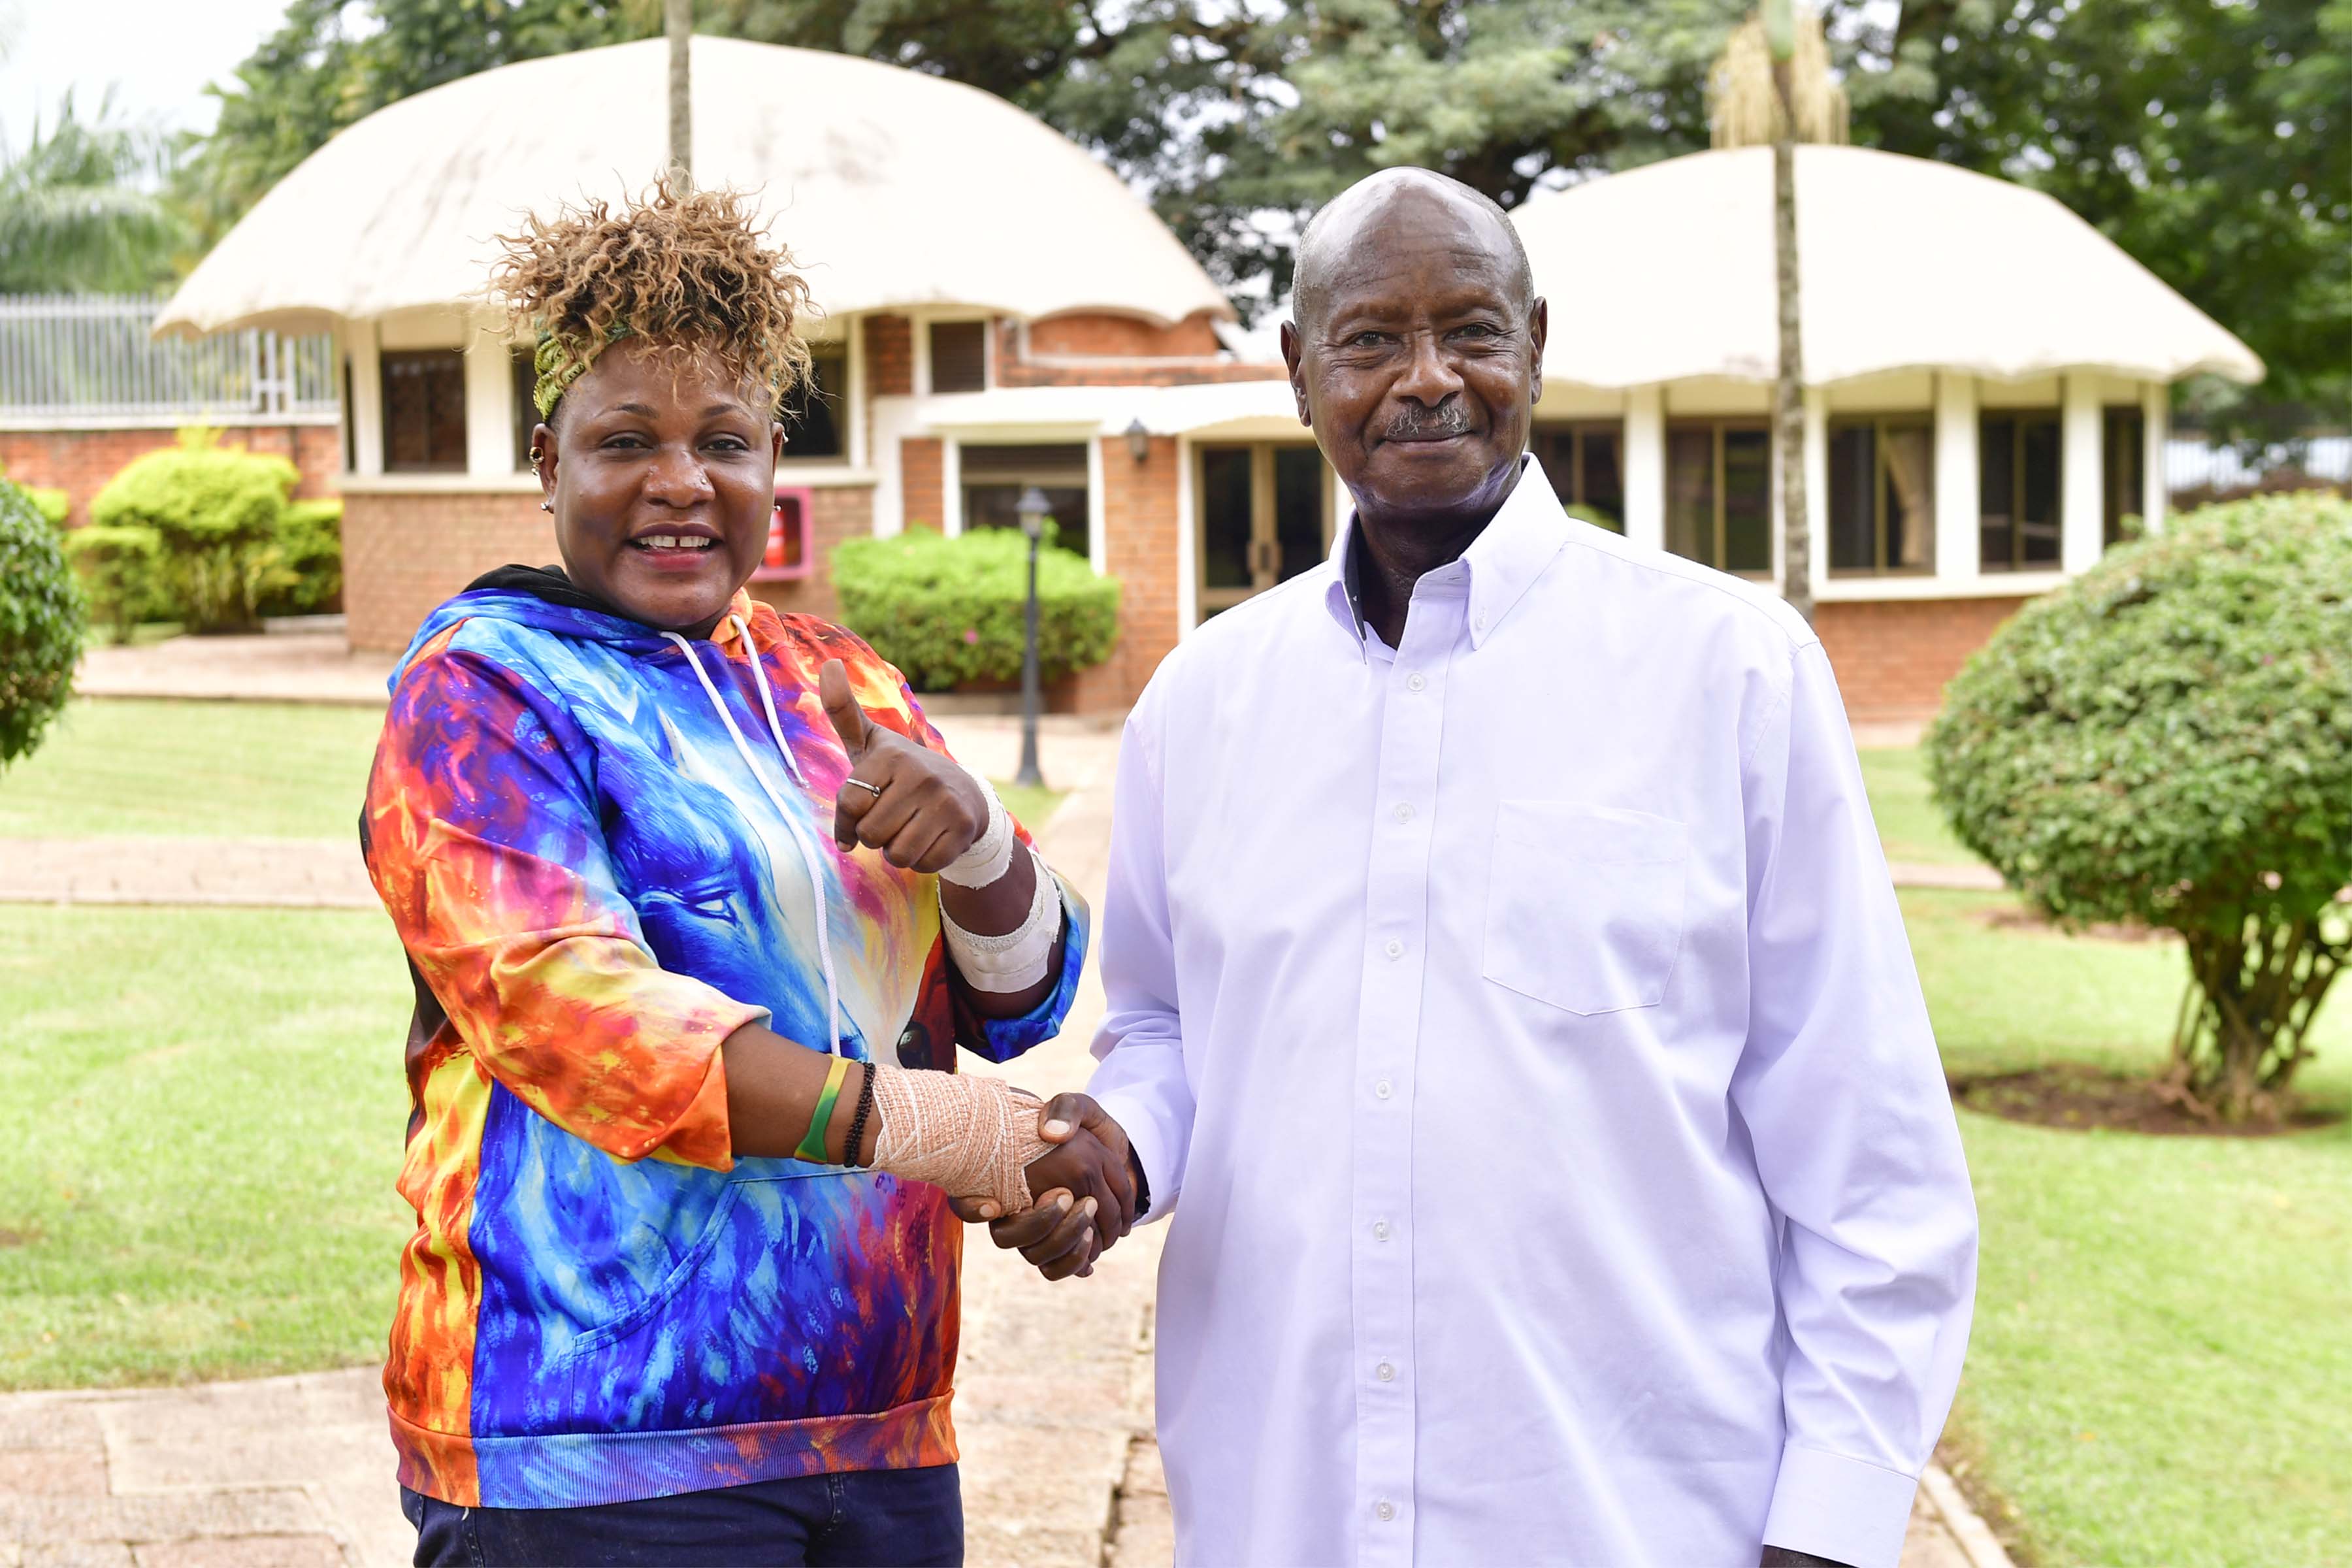 https://nilepost.co.ug/wp-content/uploads/2019/11/Museveni-meets-Jennifer-Full-figure-.jpg